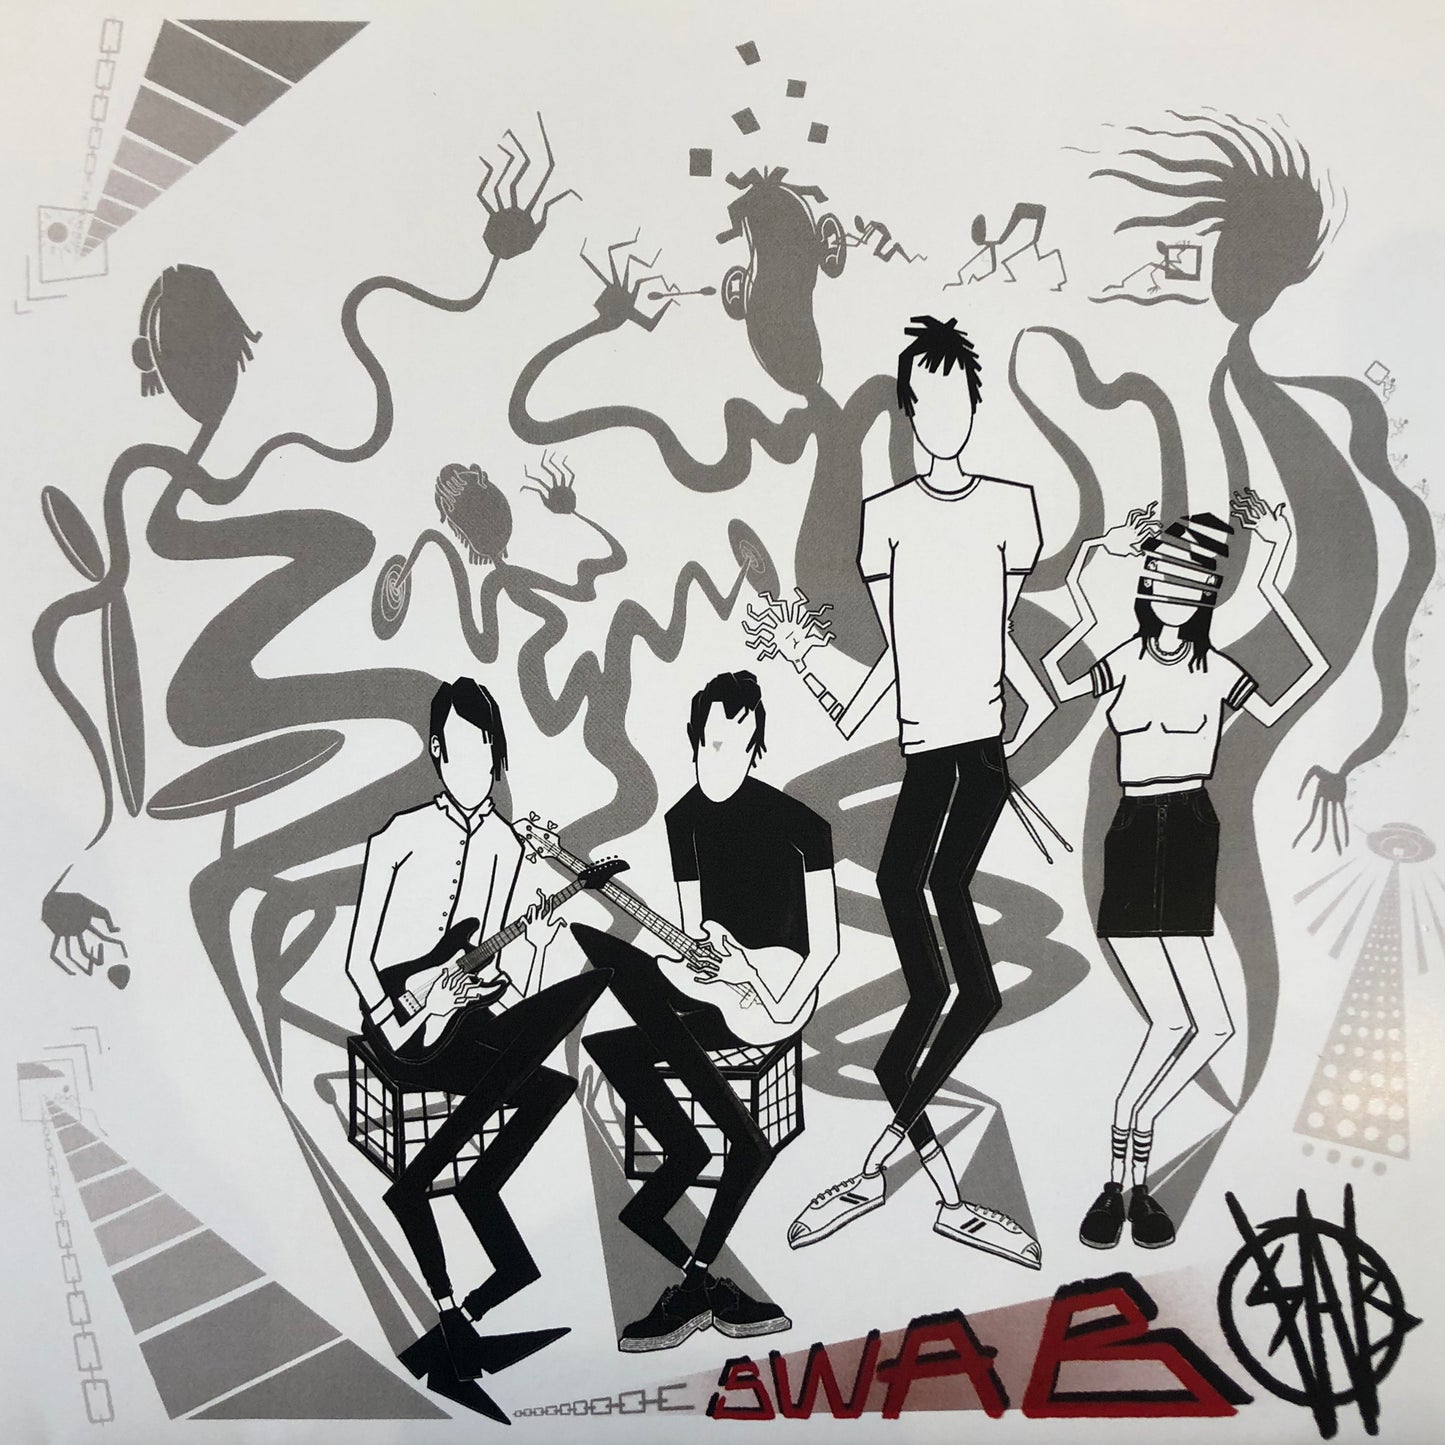 SWAB - "SMALL WORLD" 7"